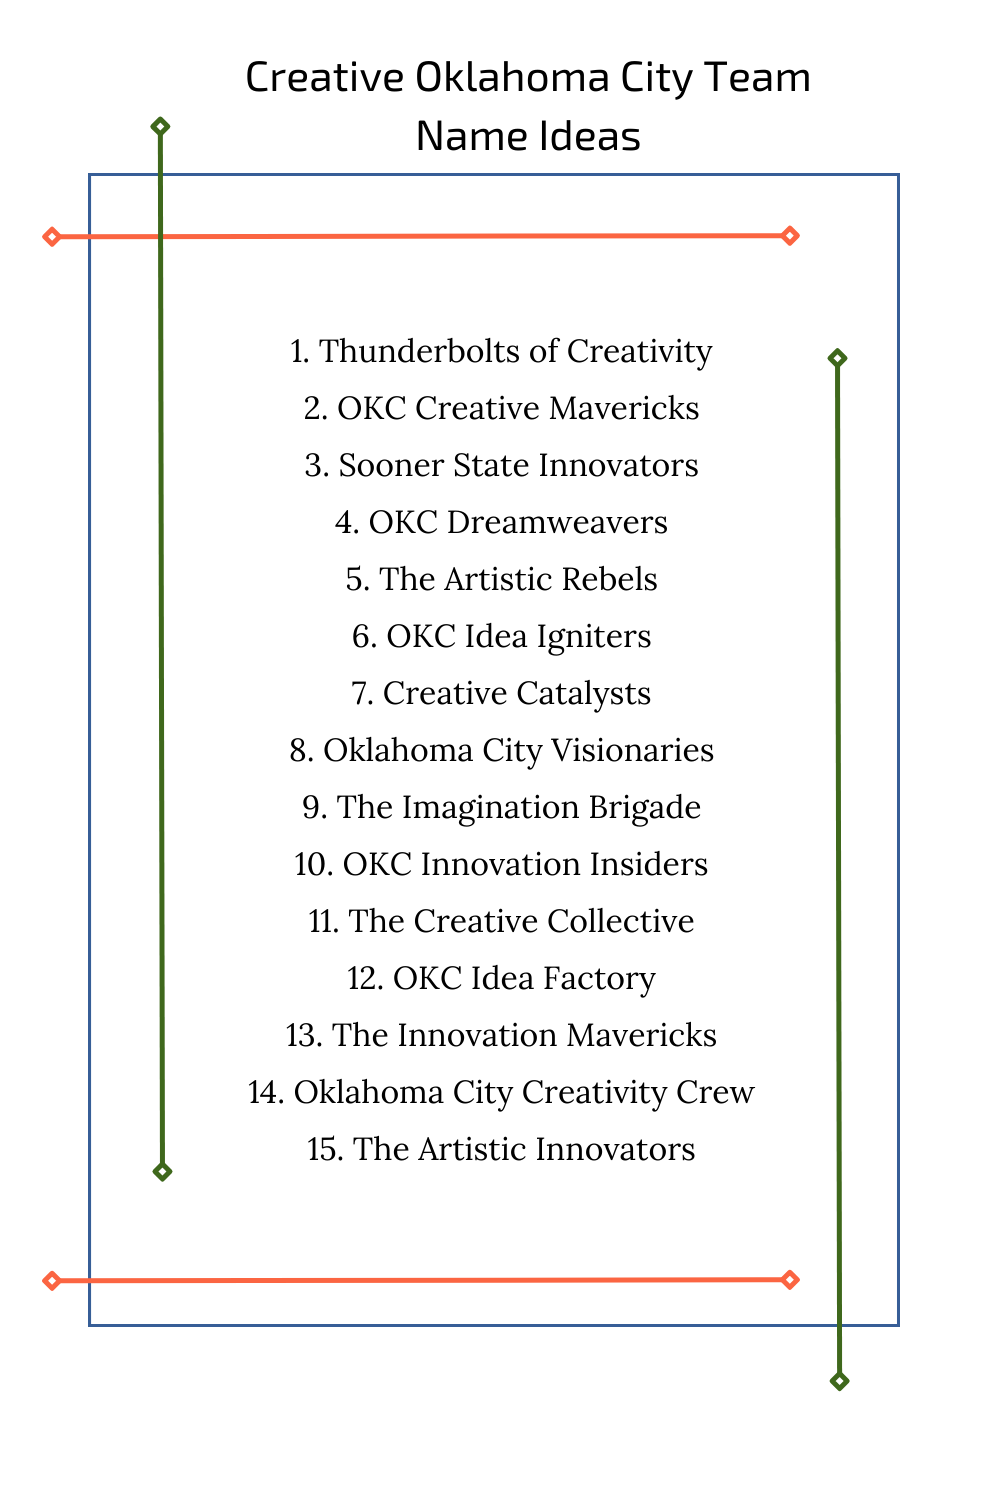 Creative Oklahoma City Team Name Ideas